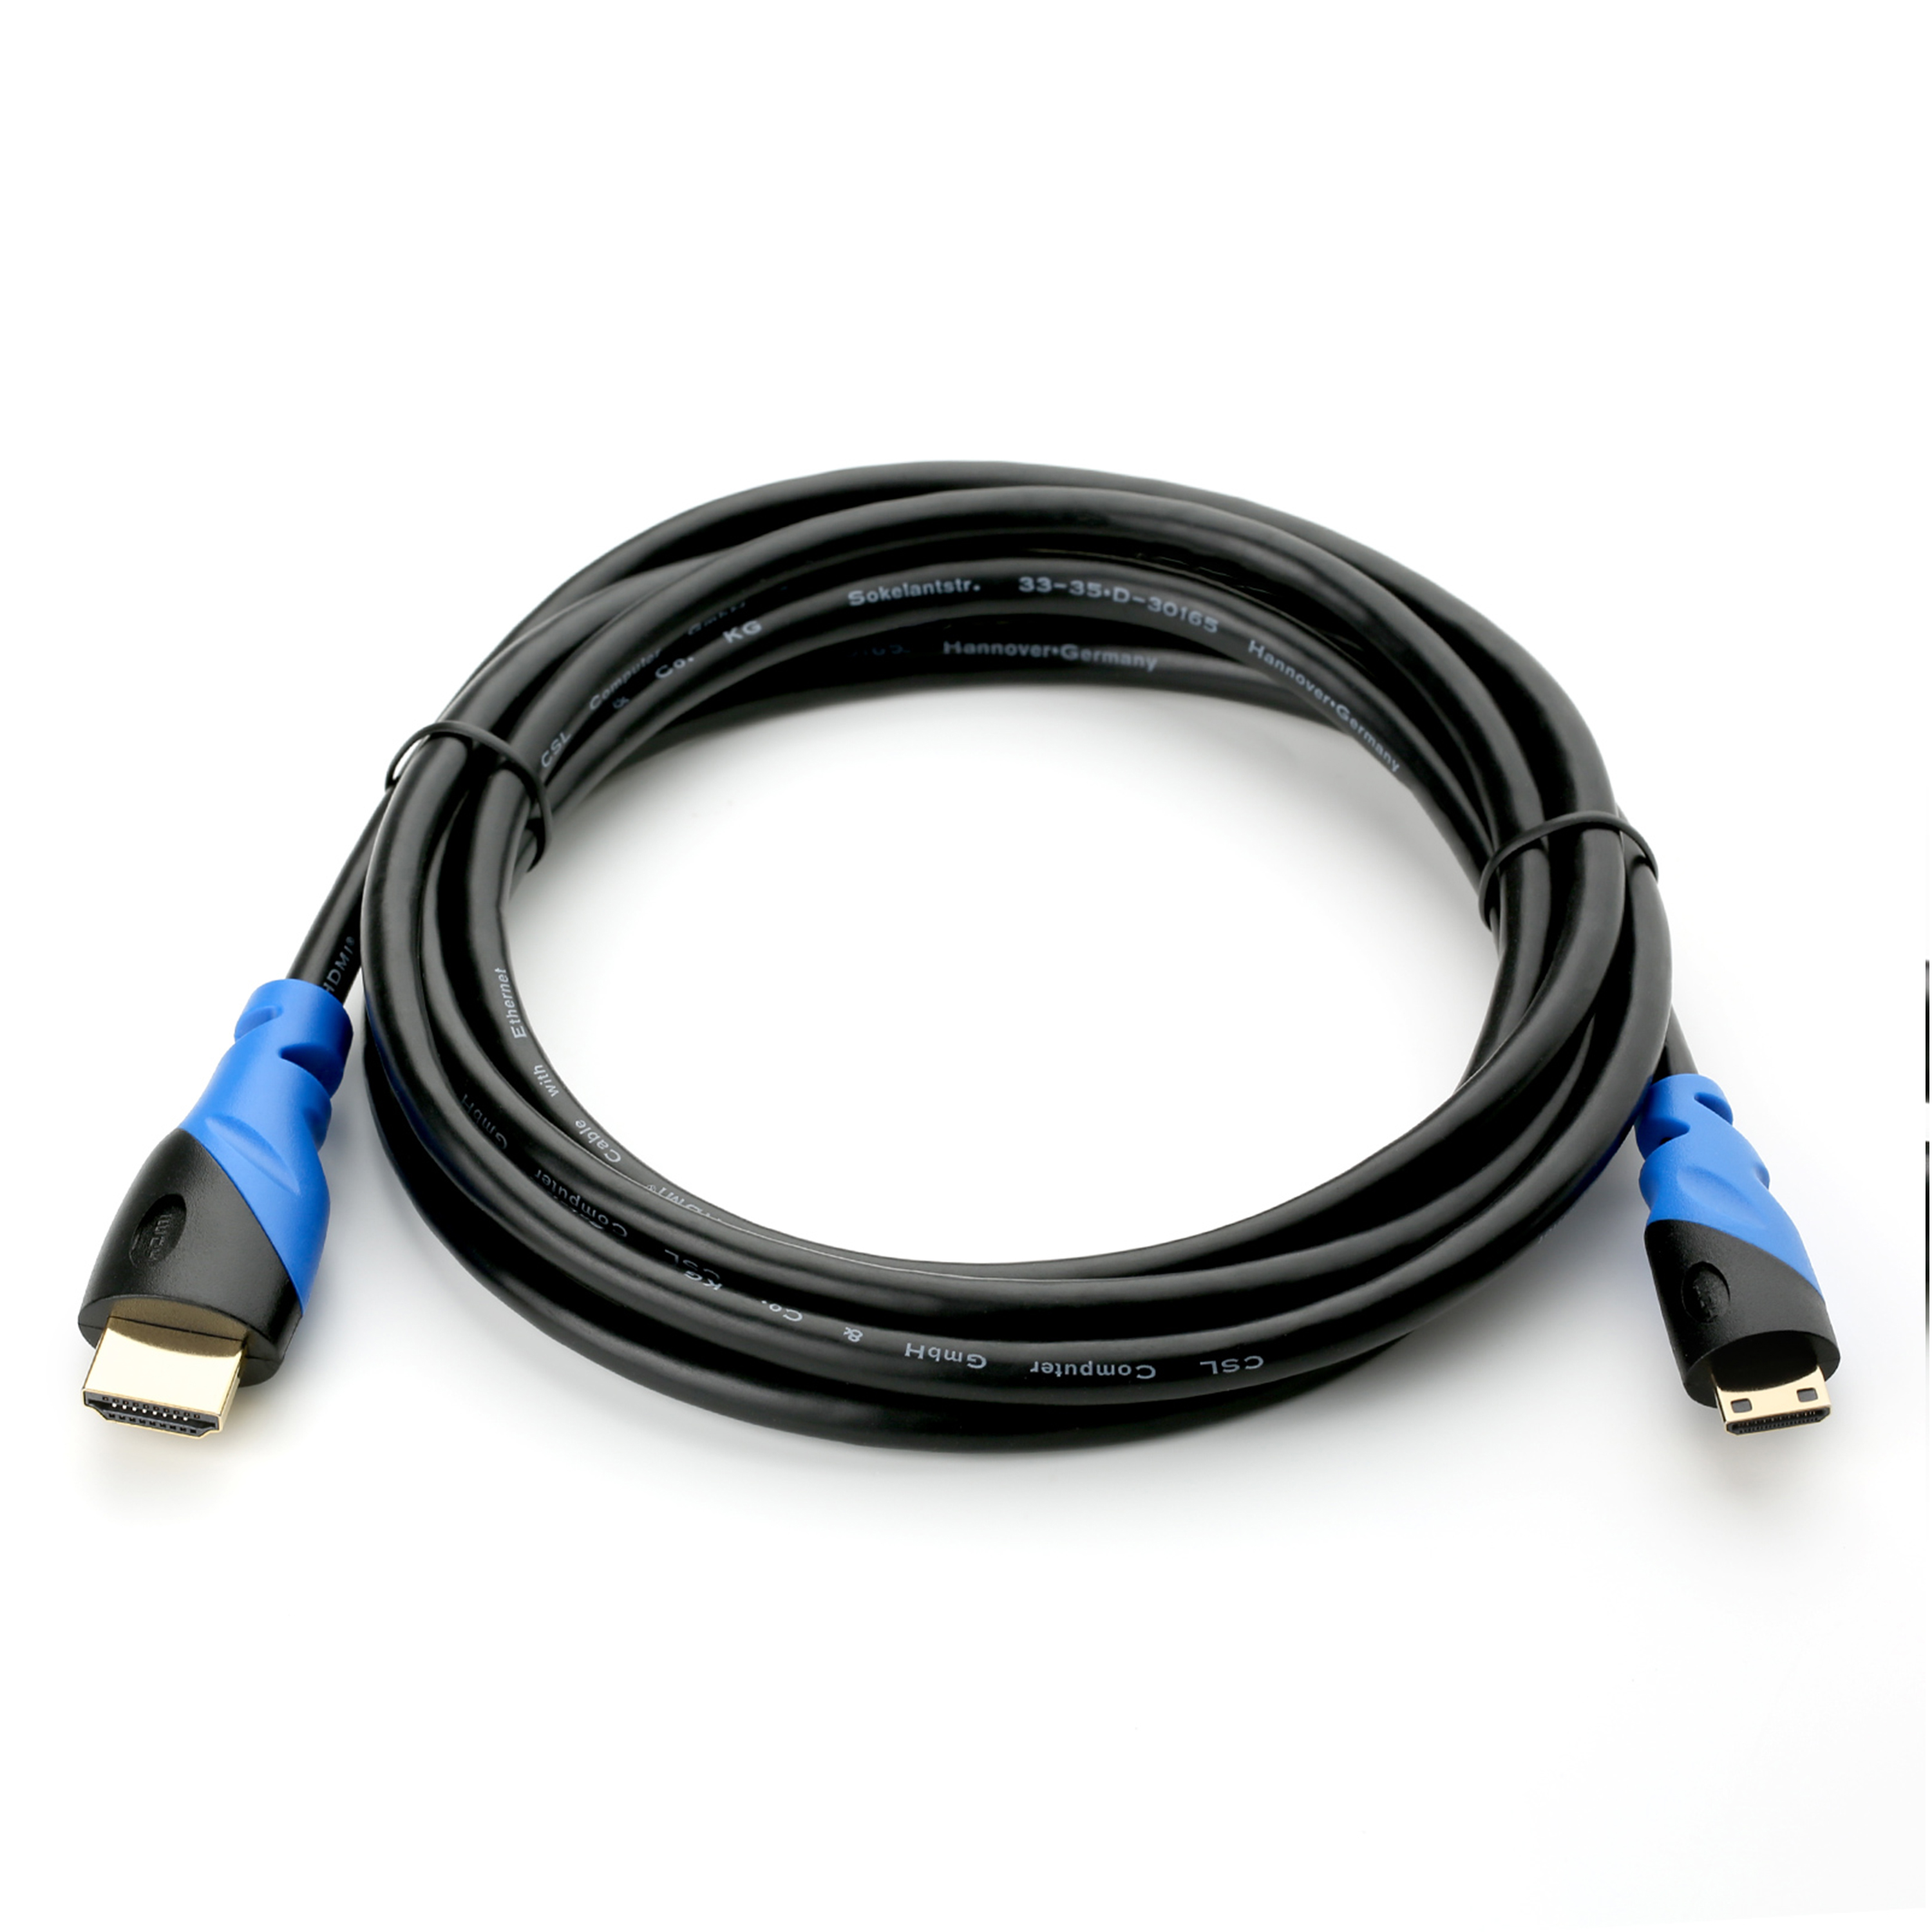 Kabel, CSL 3m schwarz/blau MiniHDMI Kabel, 2.0 HDMI